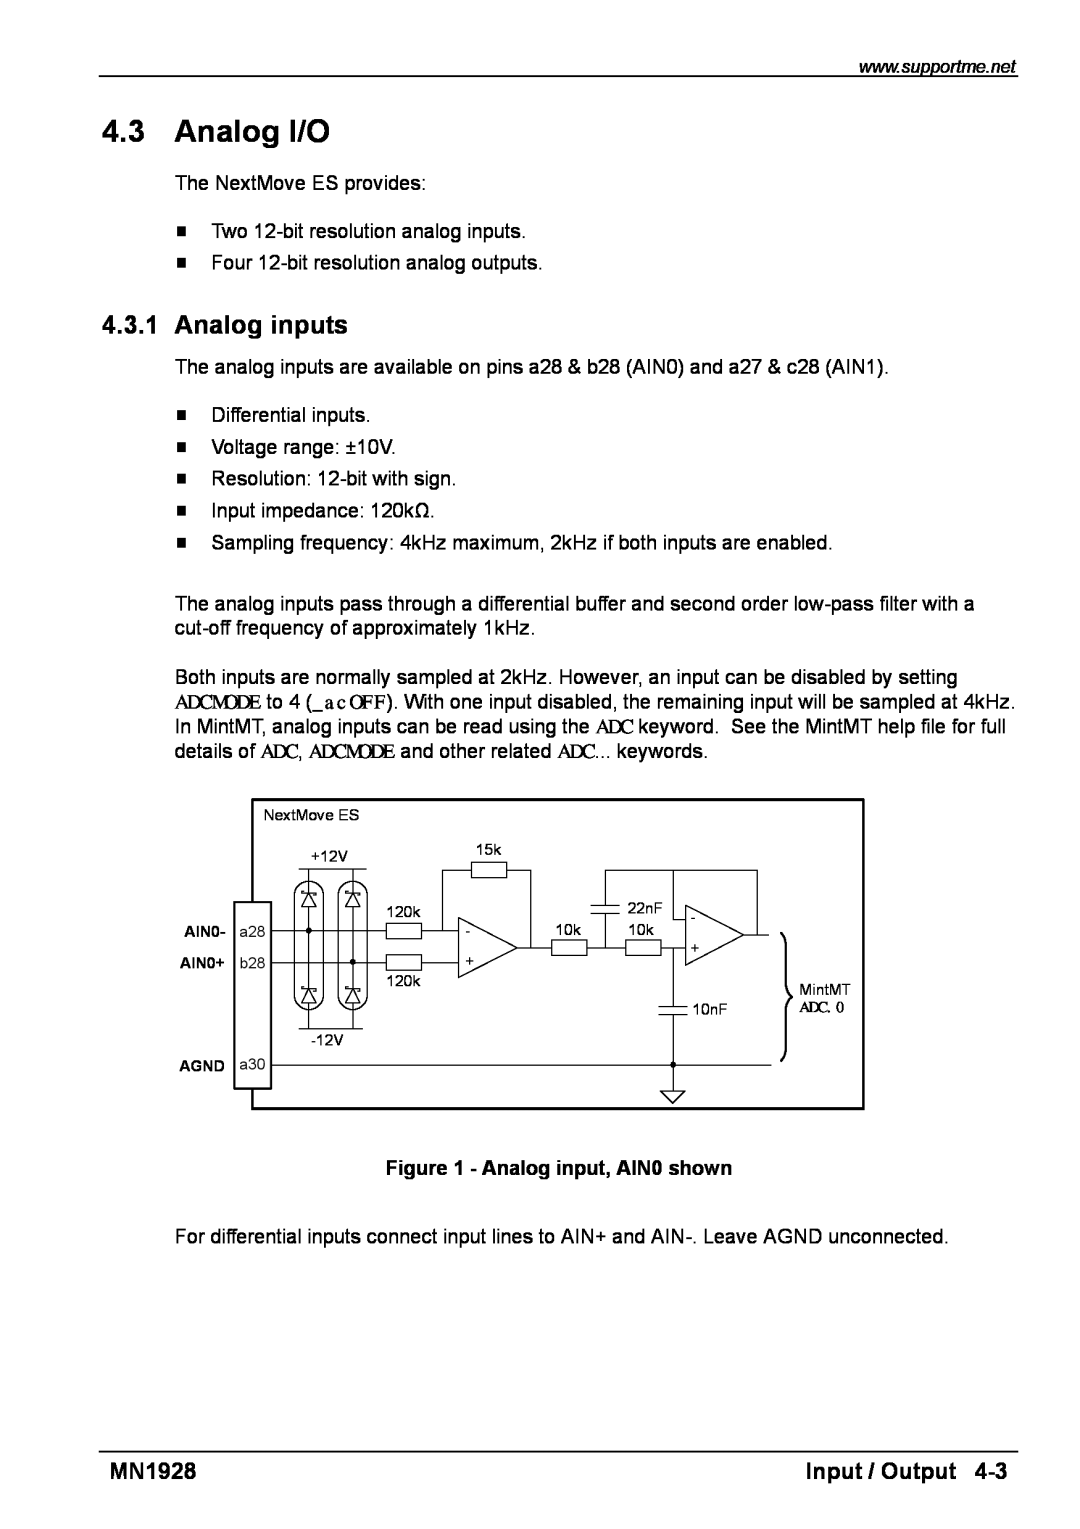 Baldor MN1928 installation manual Analog I/O, Analog inputs, Input / Output, Analog input, AIN0 shown 